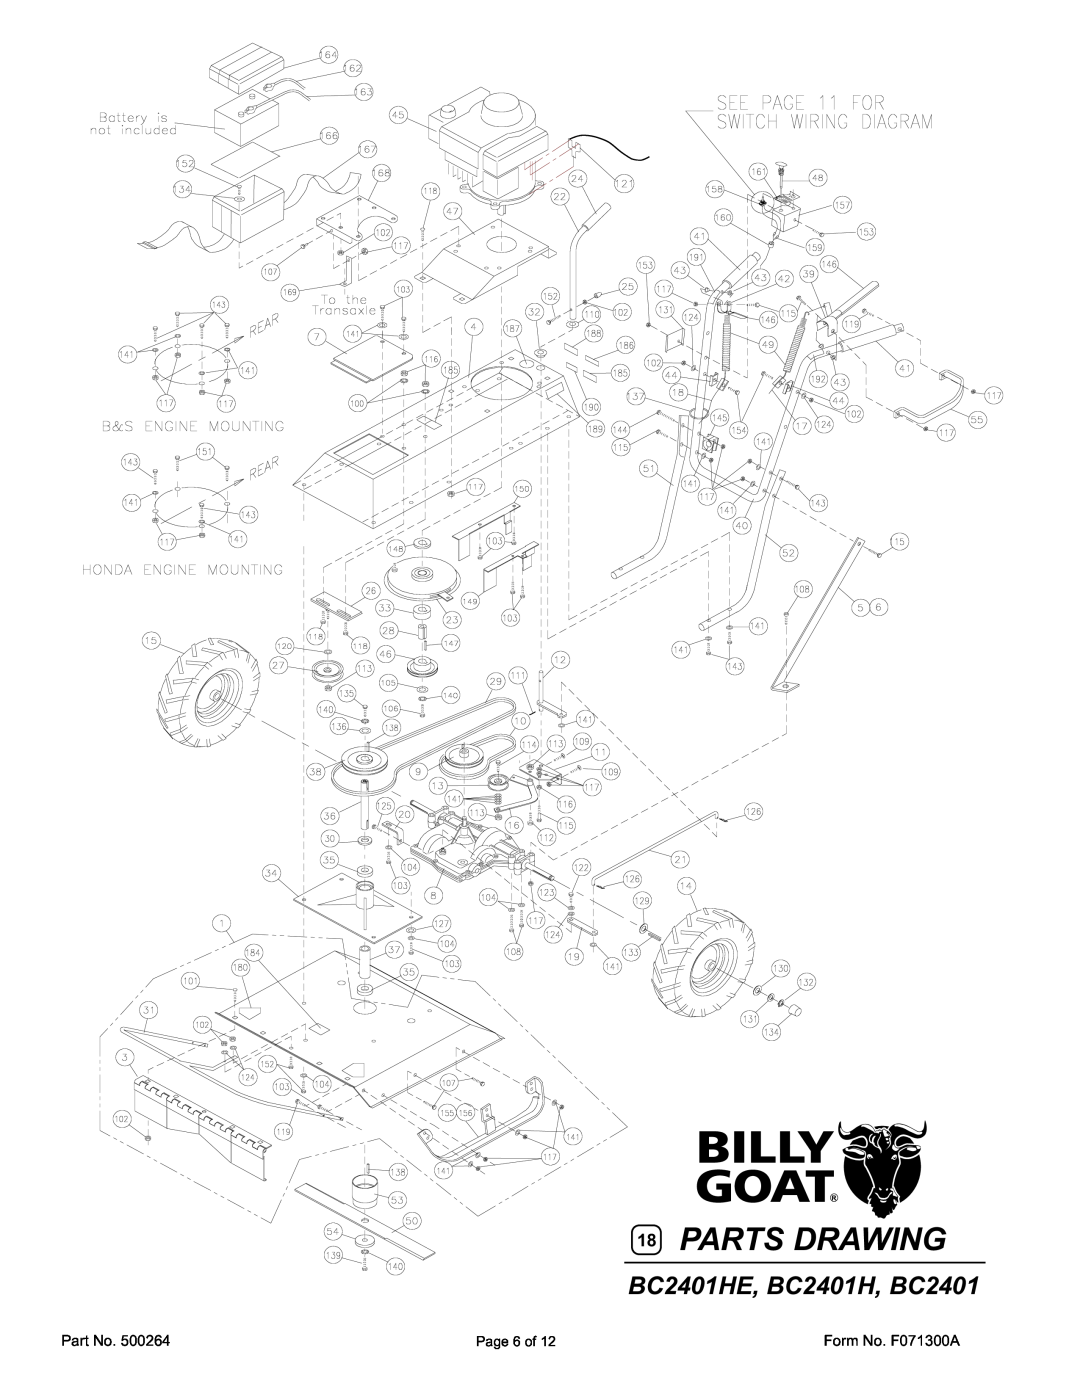 Billy Goat owner manual Parts Drawing, BC2401HE, BC2401H, BC2401 